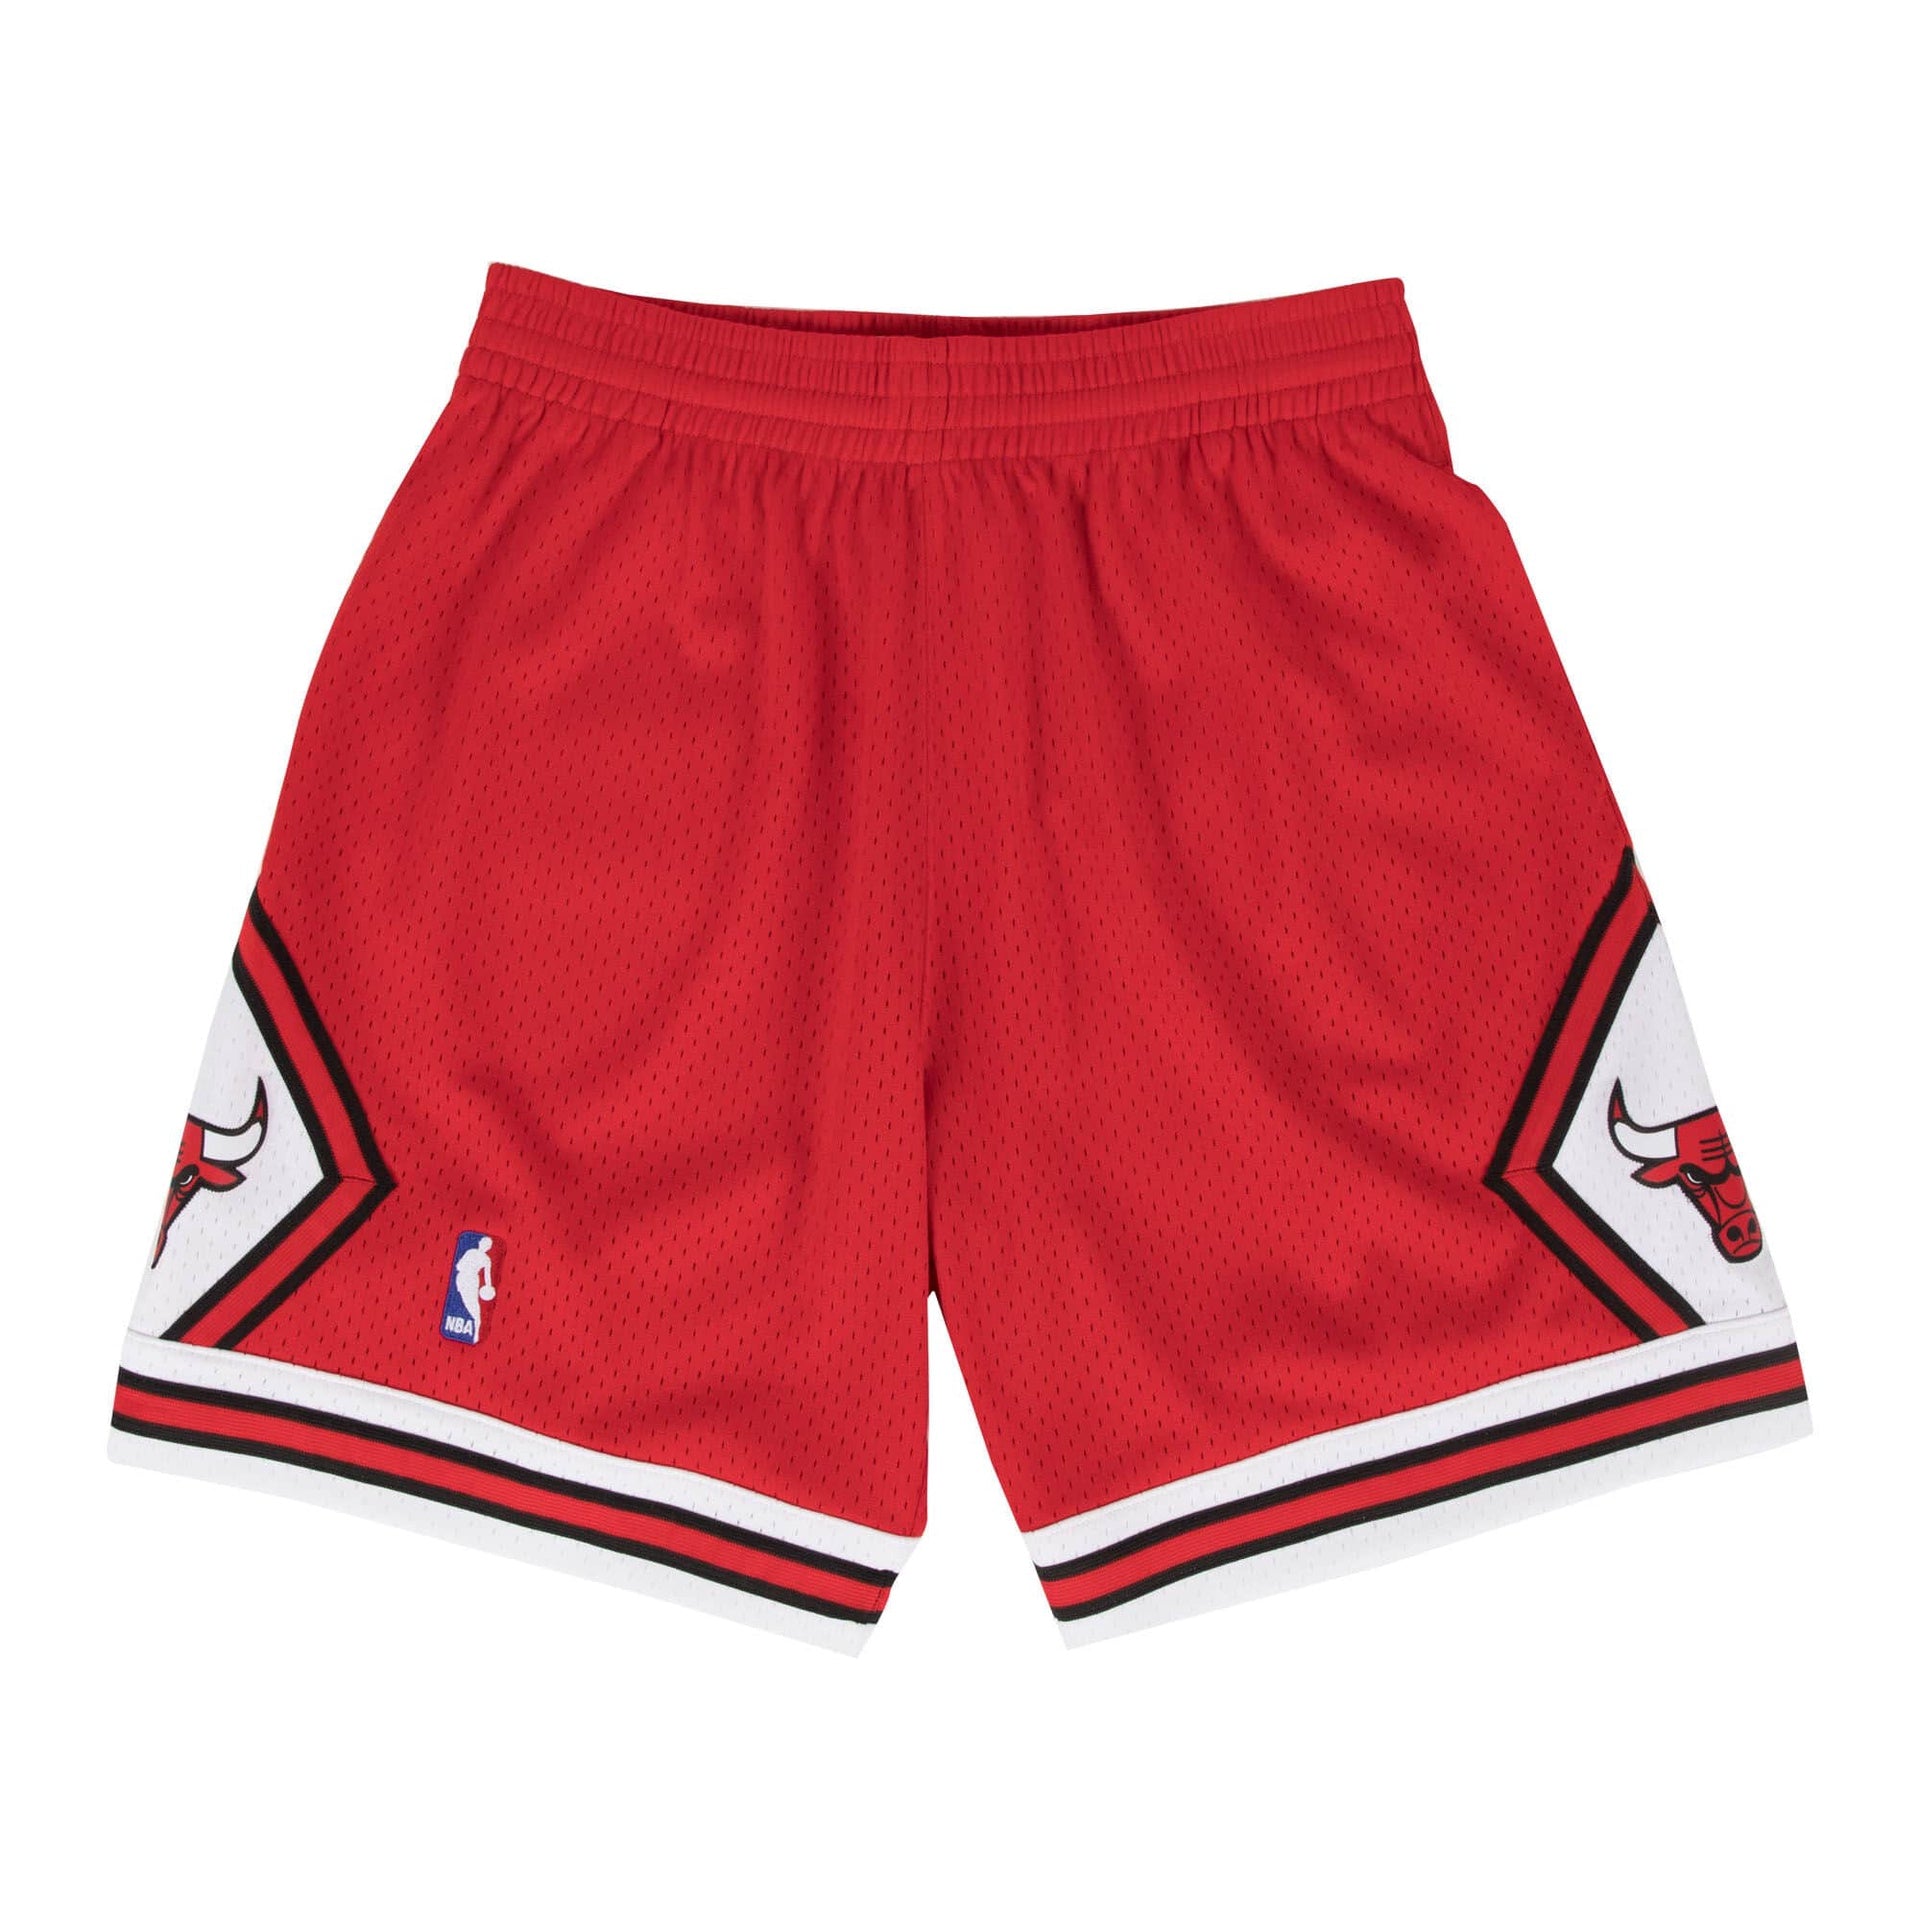 MITCHELL & NESS - NBA Swingman Shorts Bulls  - Red